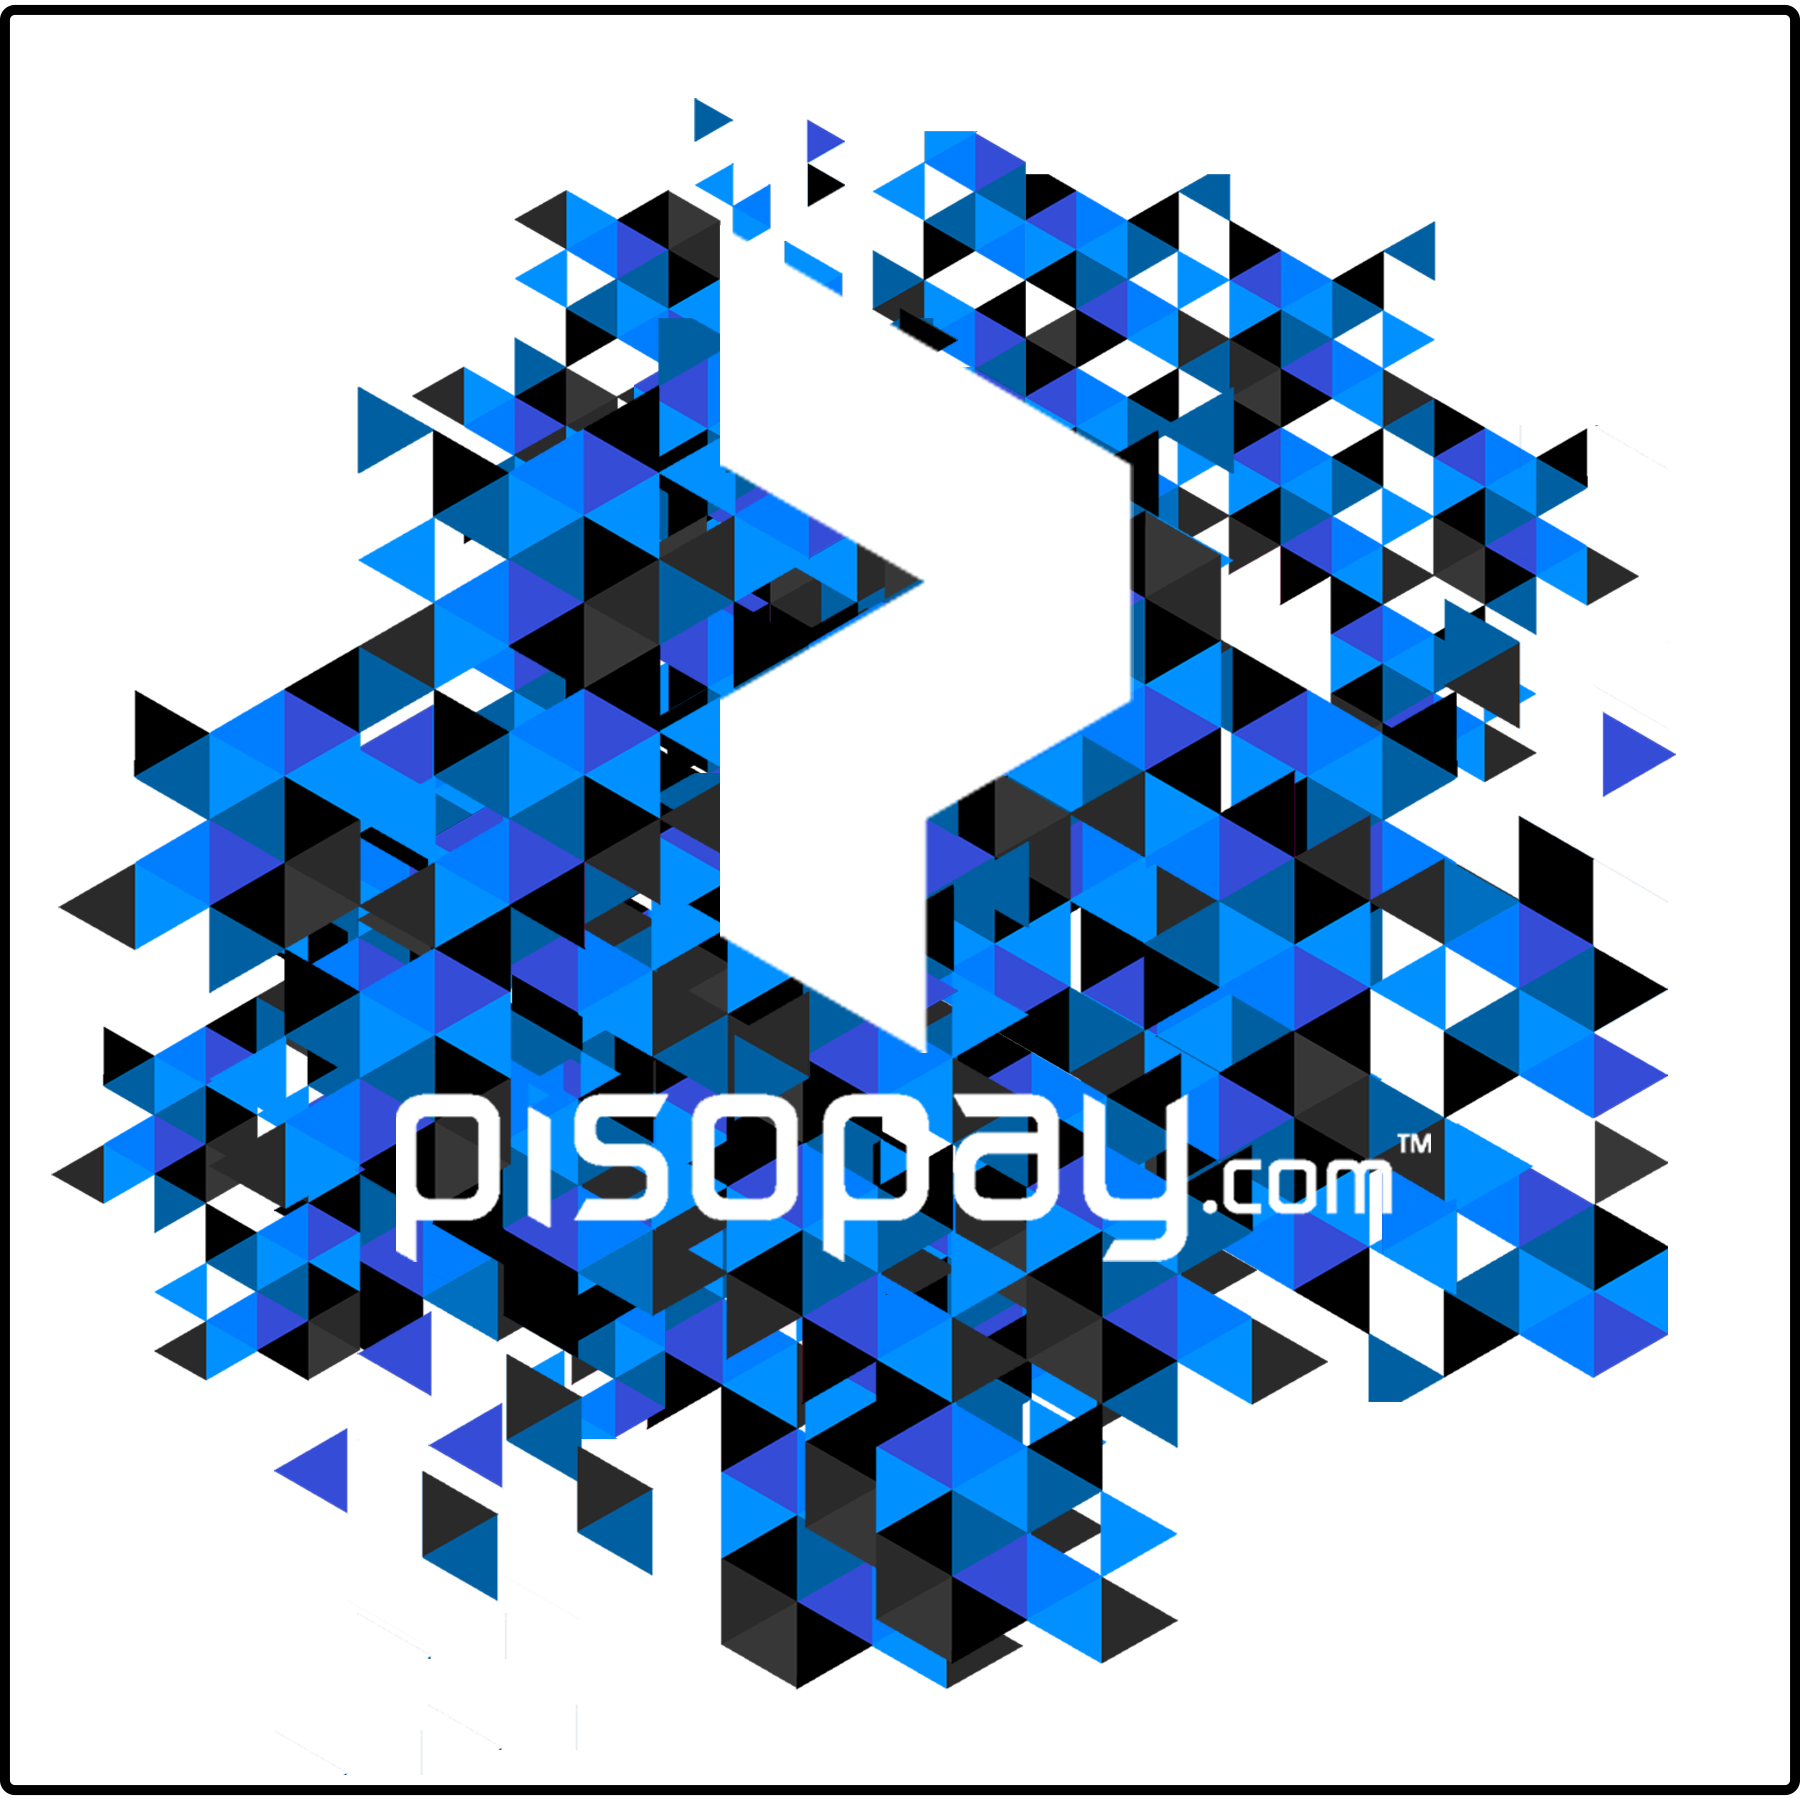 Pisopay.com Inc